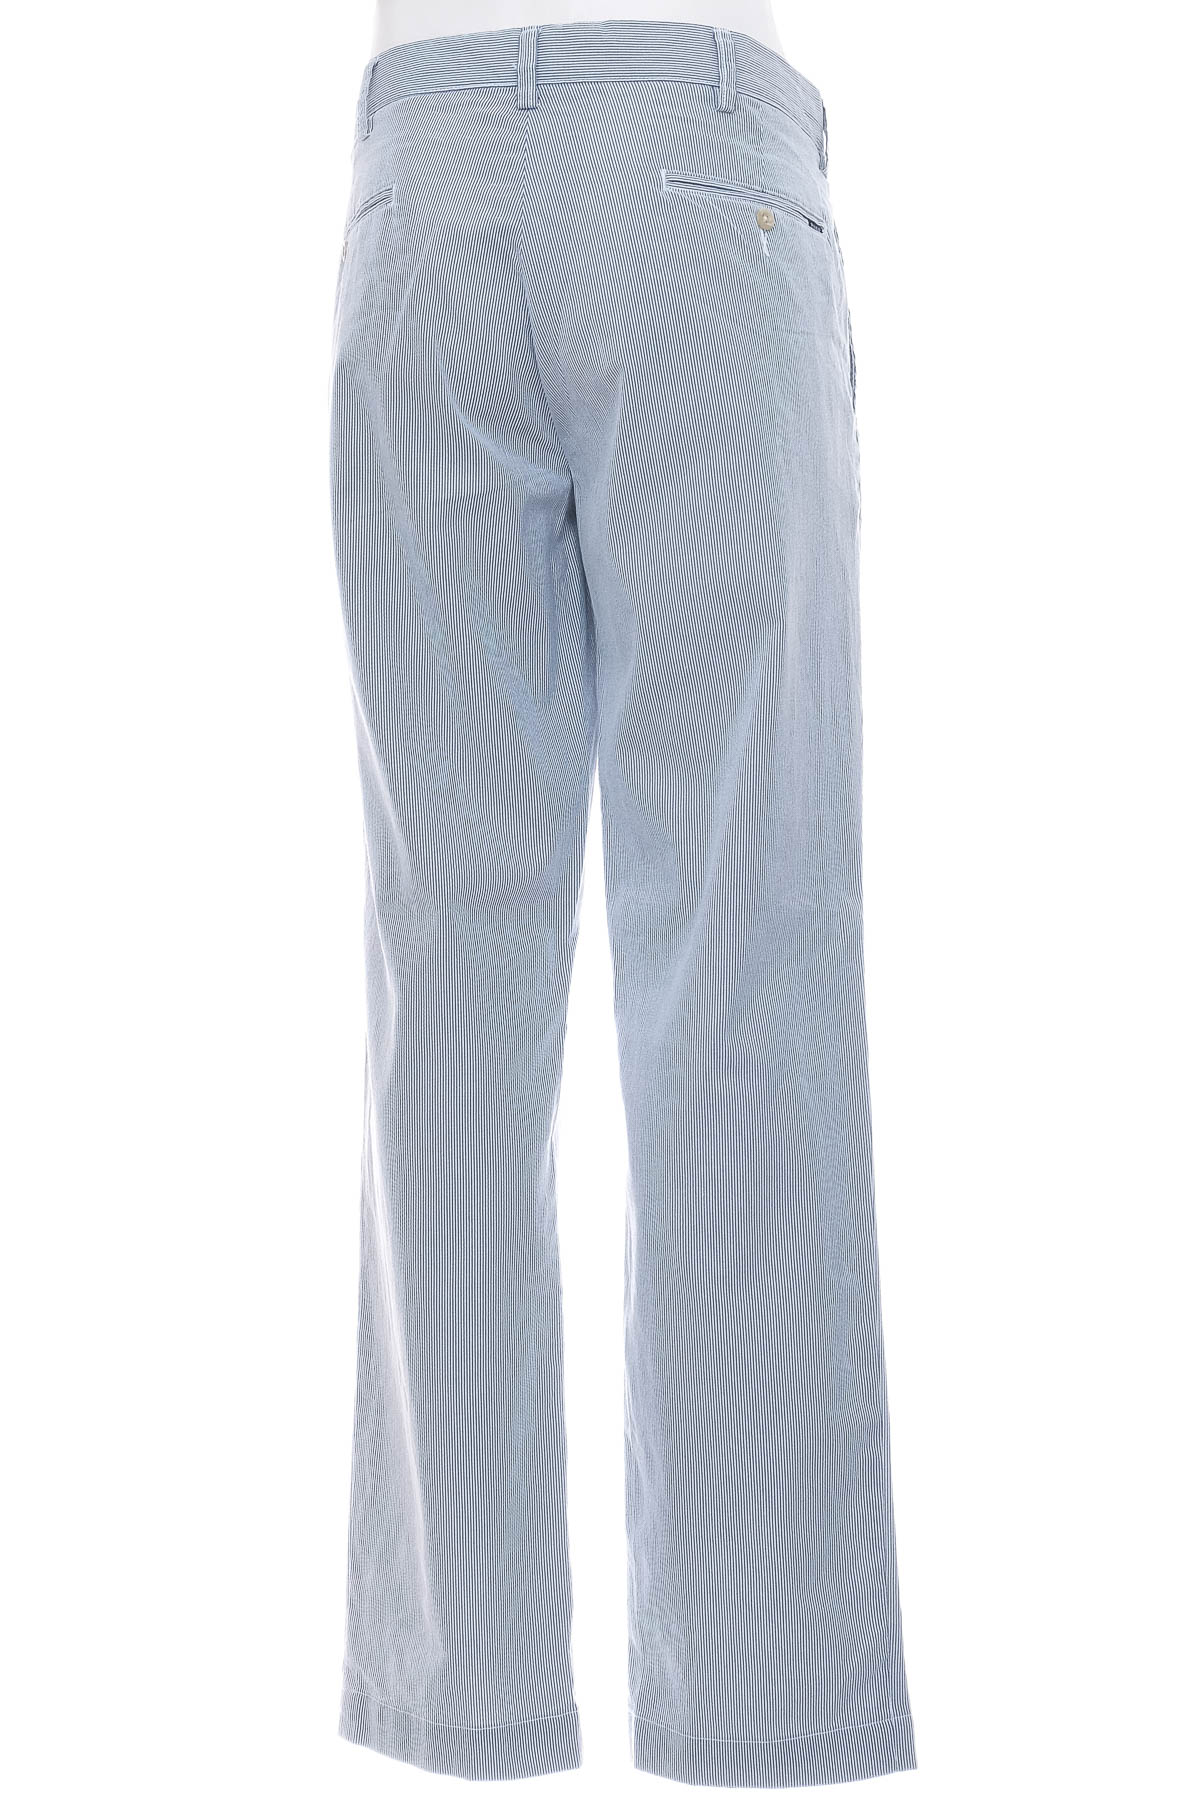 Men's trousers - POLO RALPH LAUREN - 1